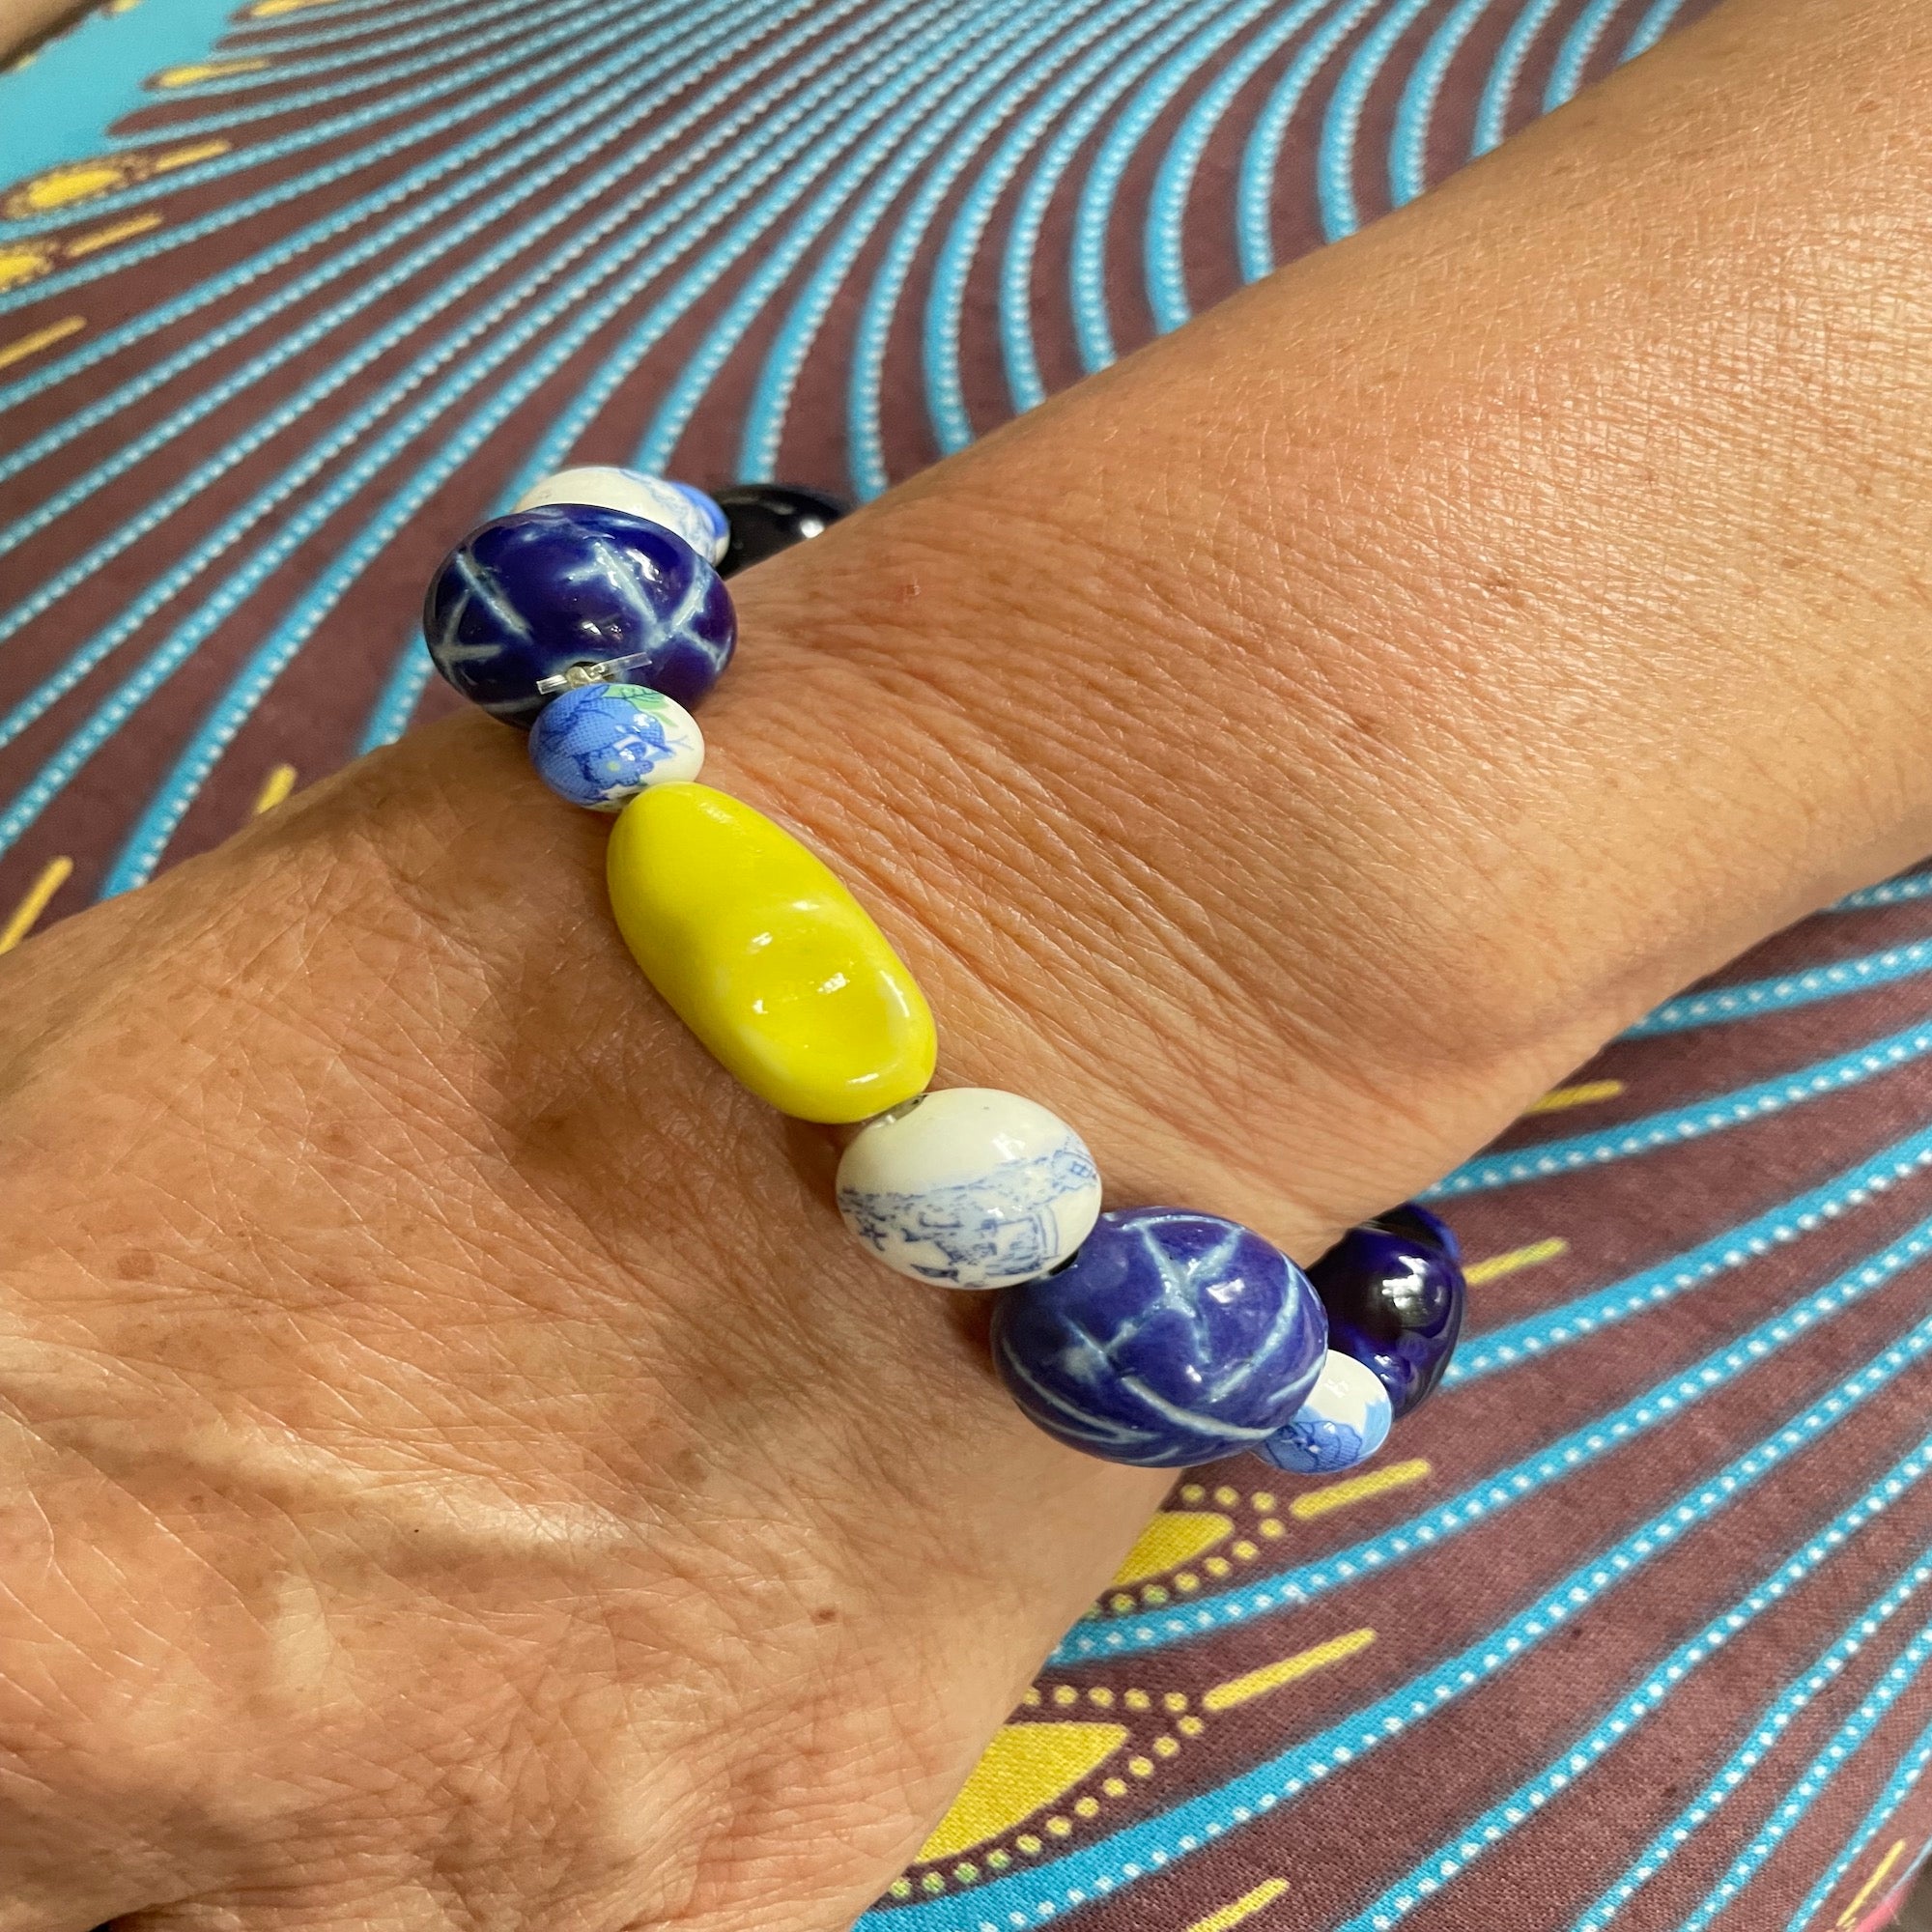 Delft blue ceramic bracelet MIX yellow glog